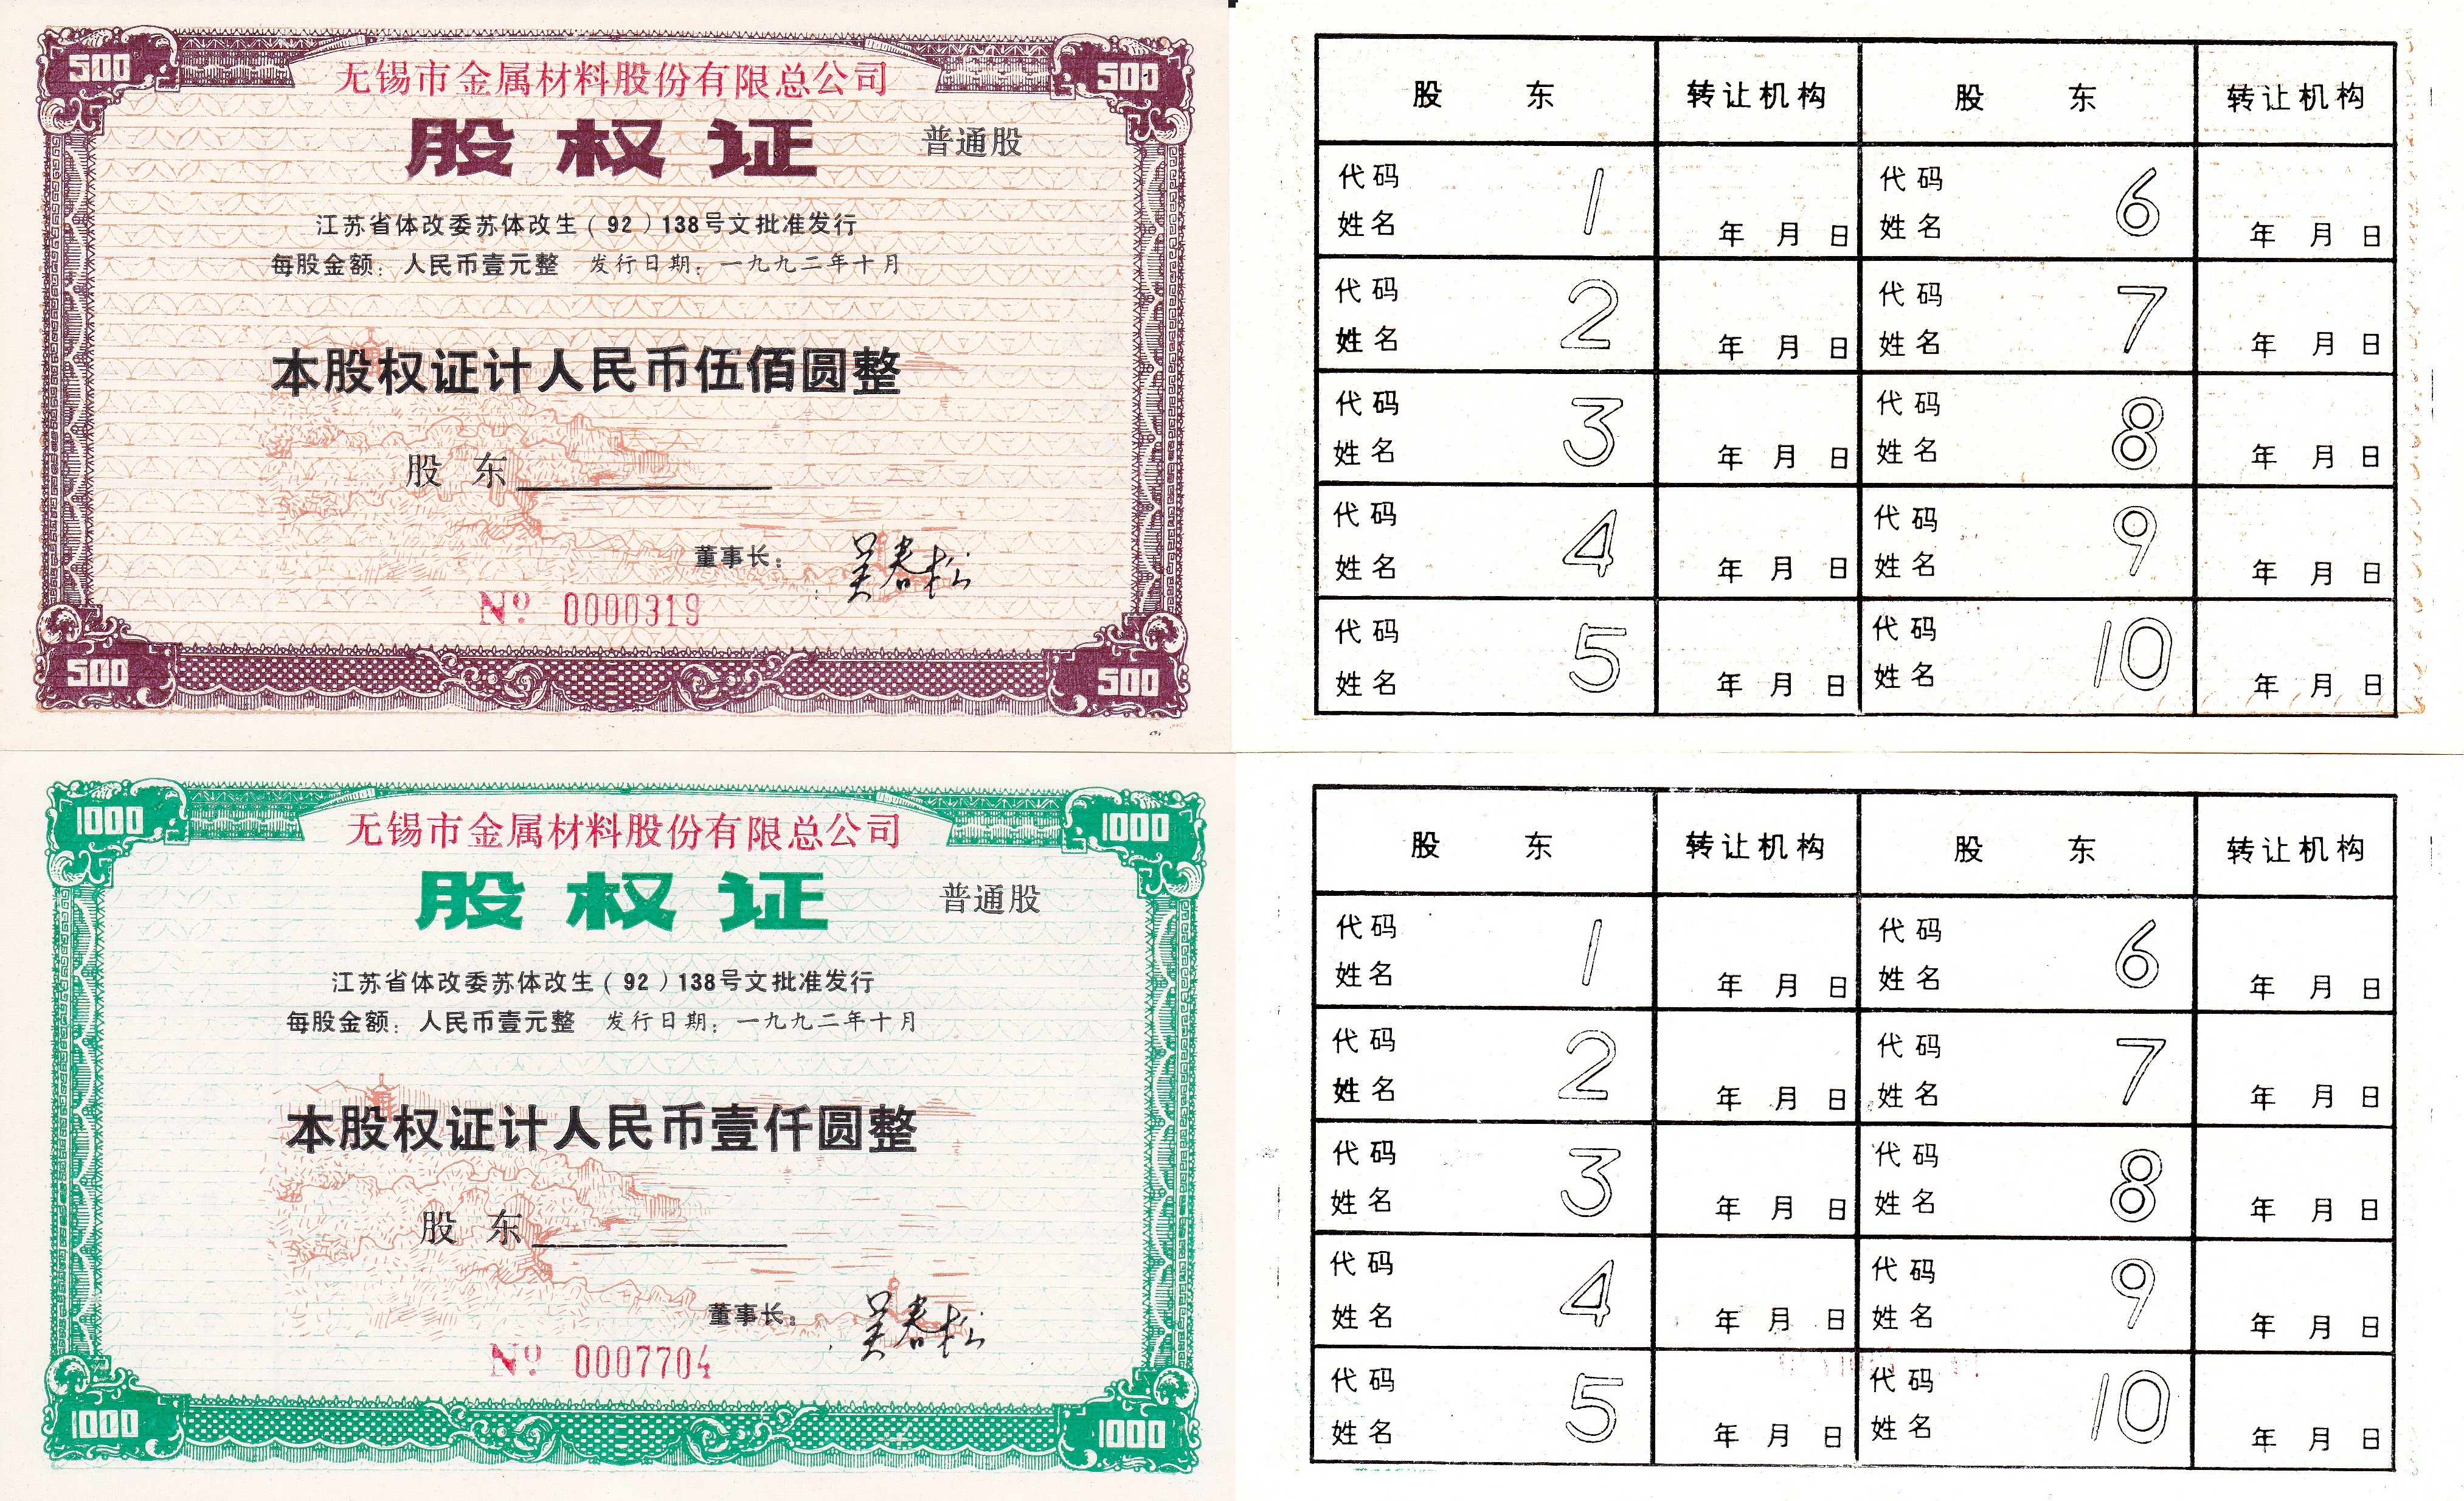 S3233, Wuxi City Metals Co., Ltd, 2 Pcs Stock Certificate of 1992, China